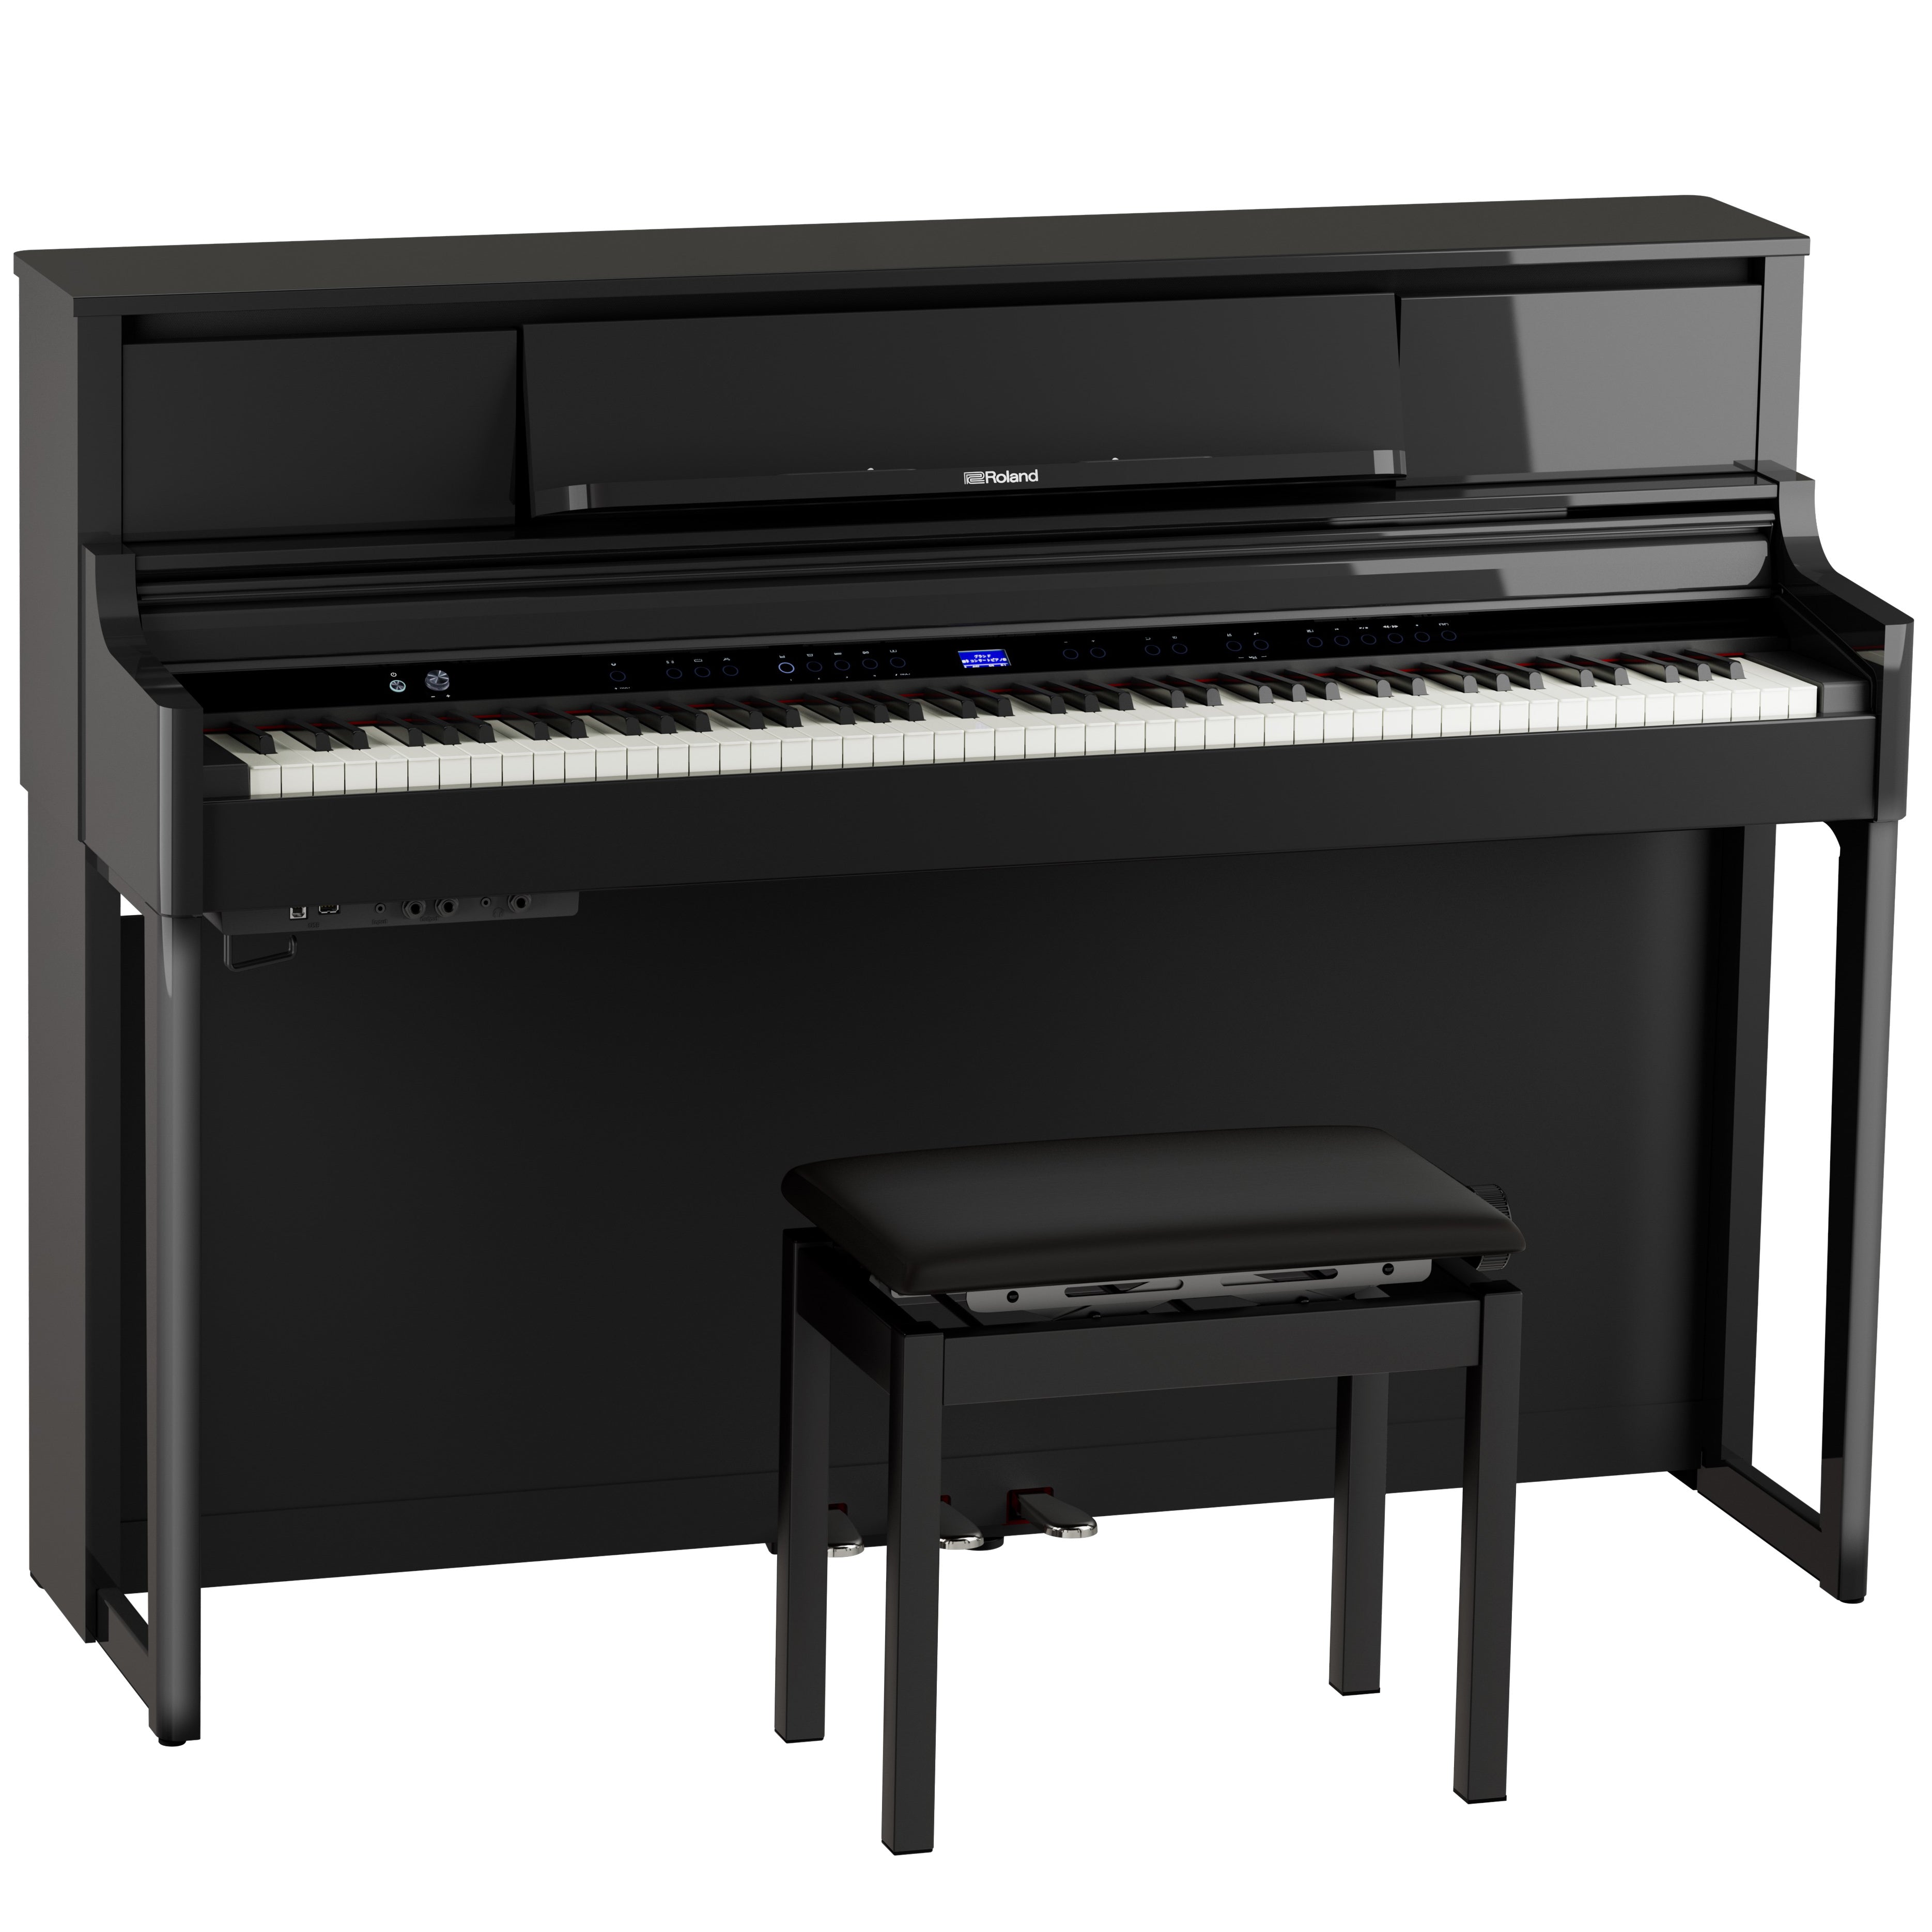 Roland LX-5 Digital Piano with Bench - Polished Ebony, View 1